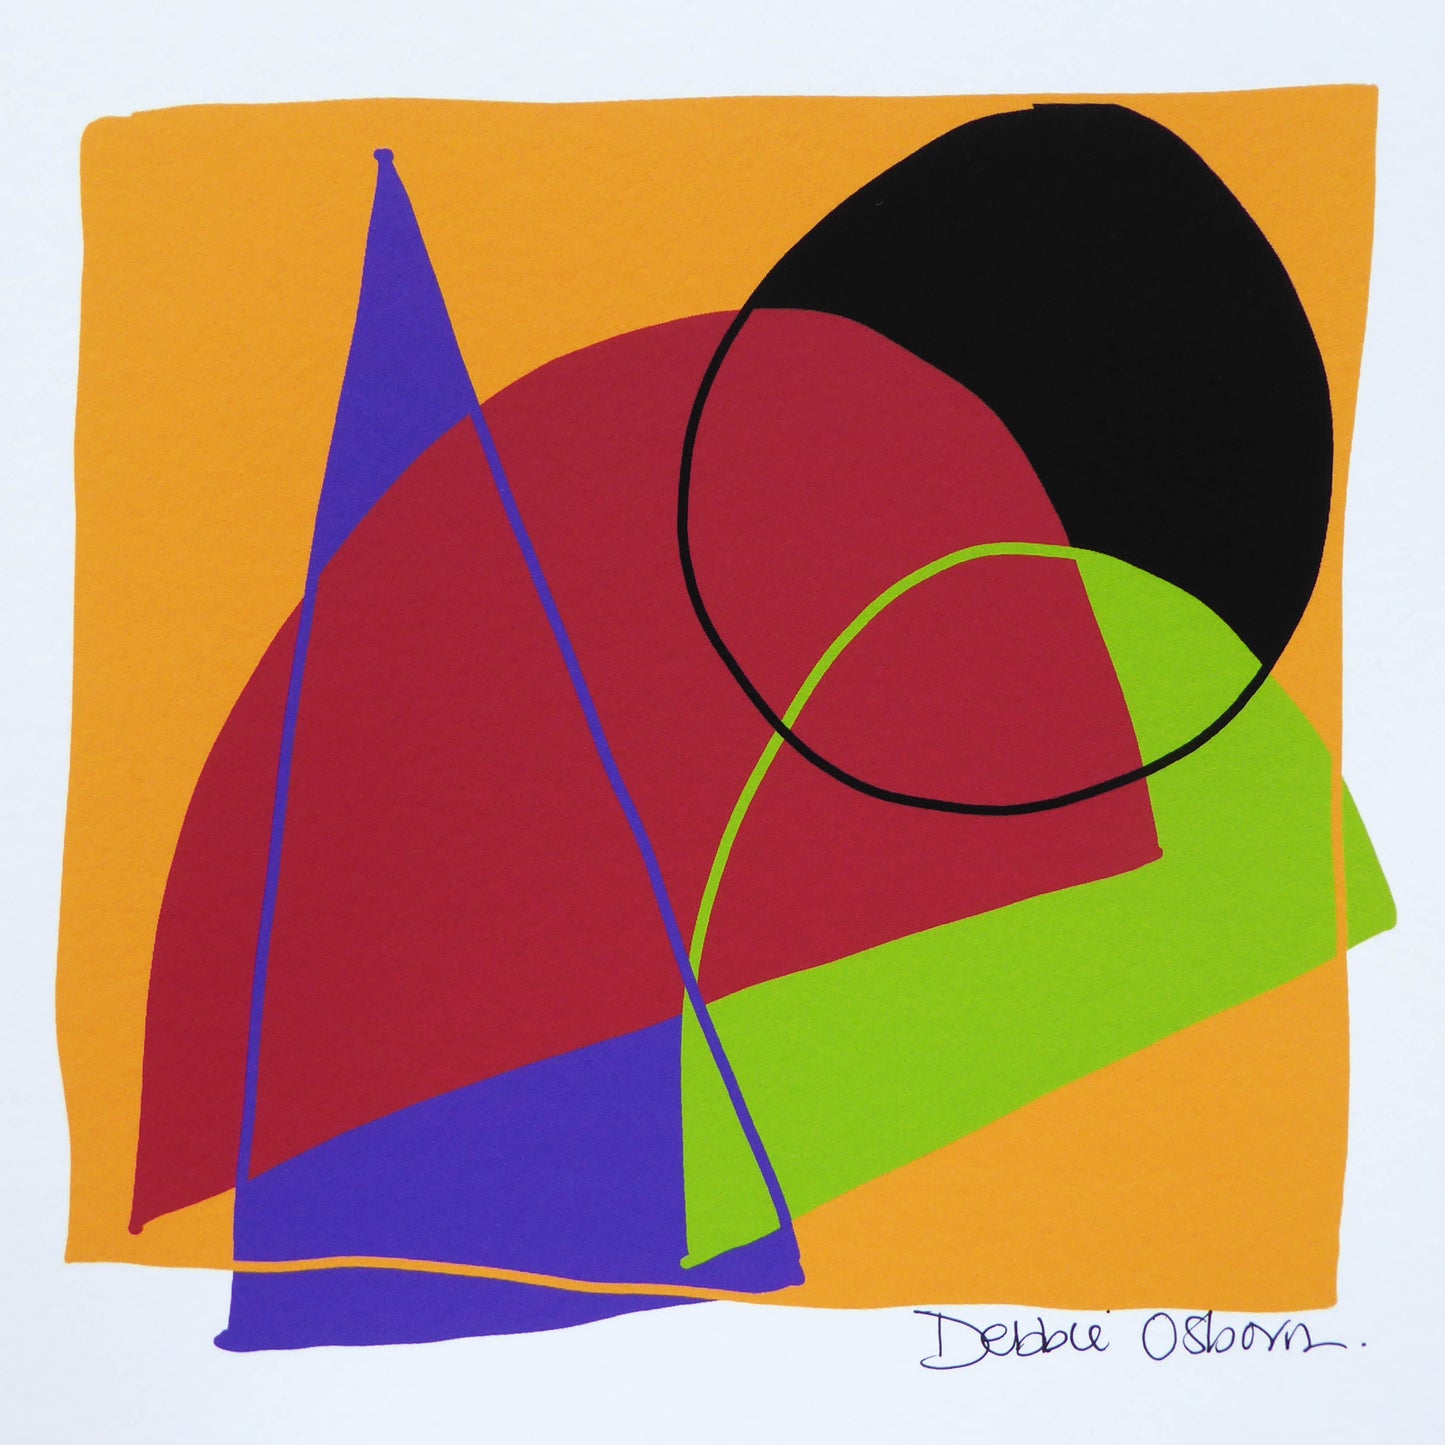 Dance - A digital work - by Norfolk based artist Debbie Osborn